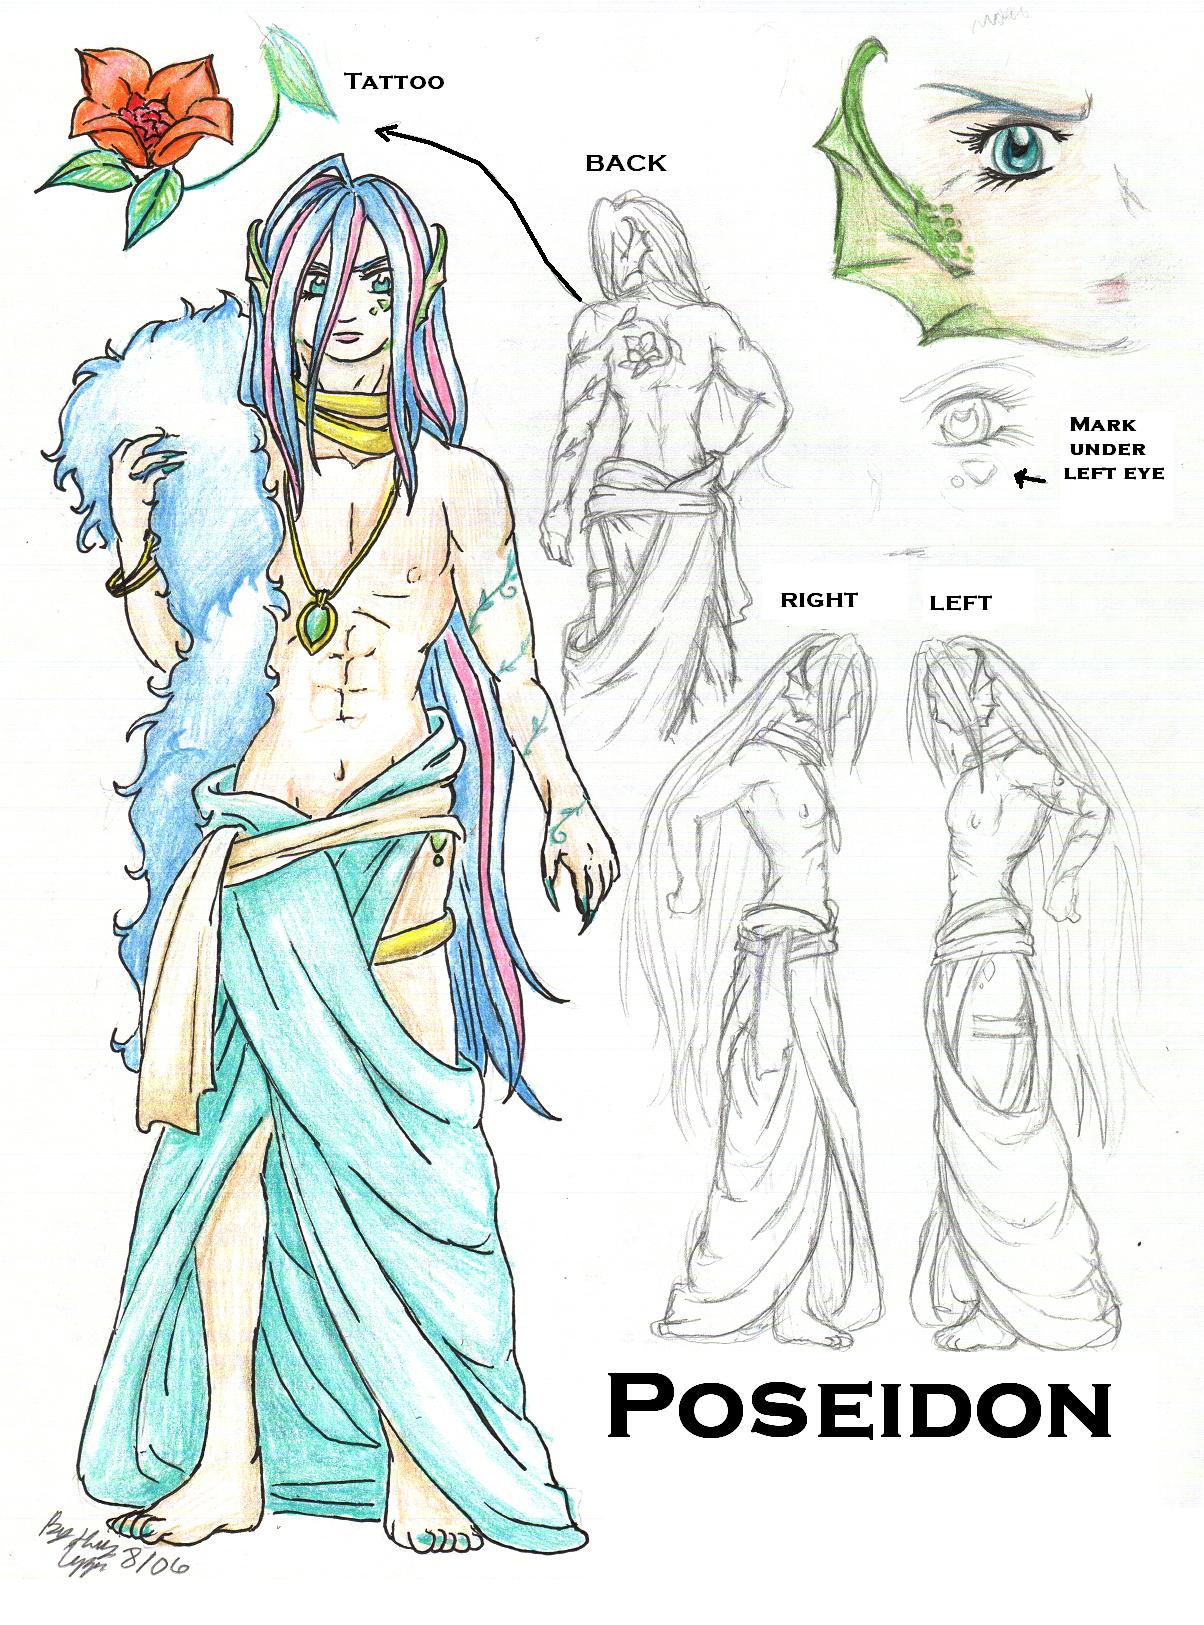 Designs of Poseidon